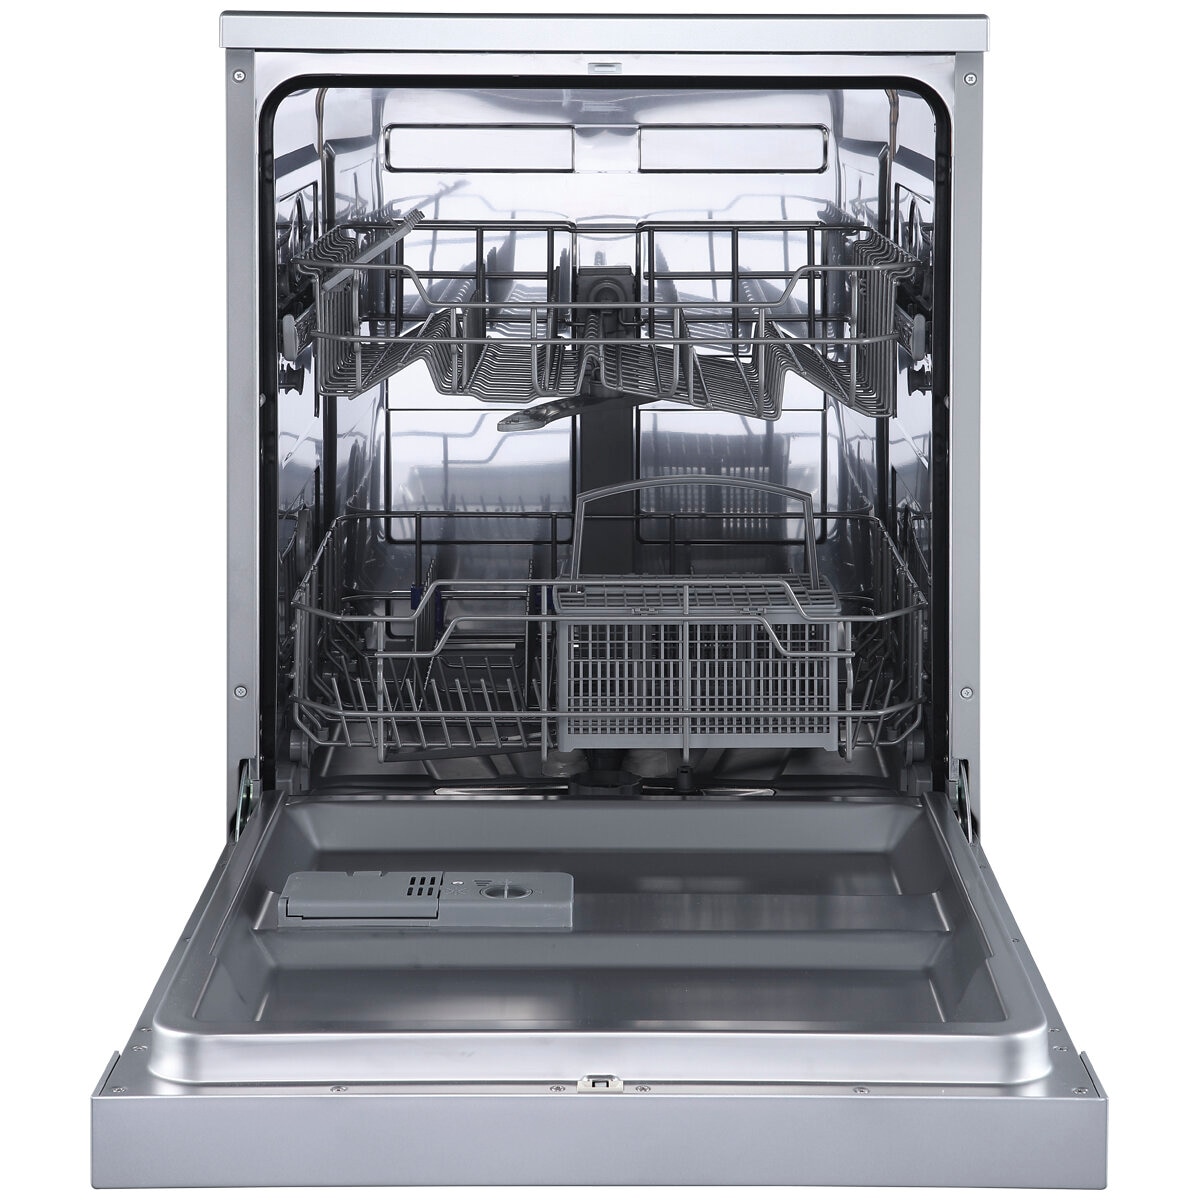 Akai 12 Place Setting Freestanding Dishwasher AK-DW12P